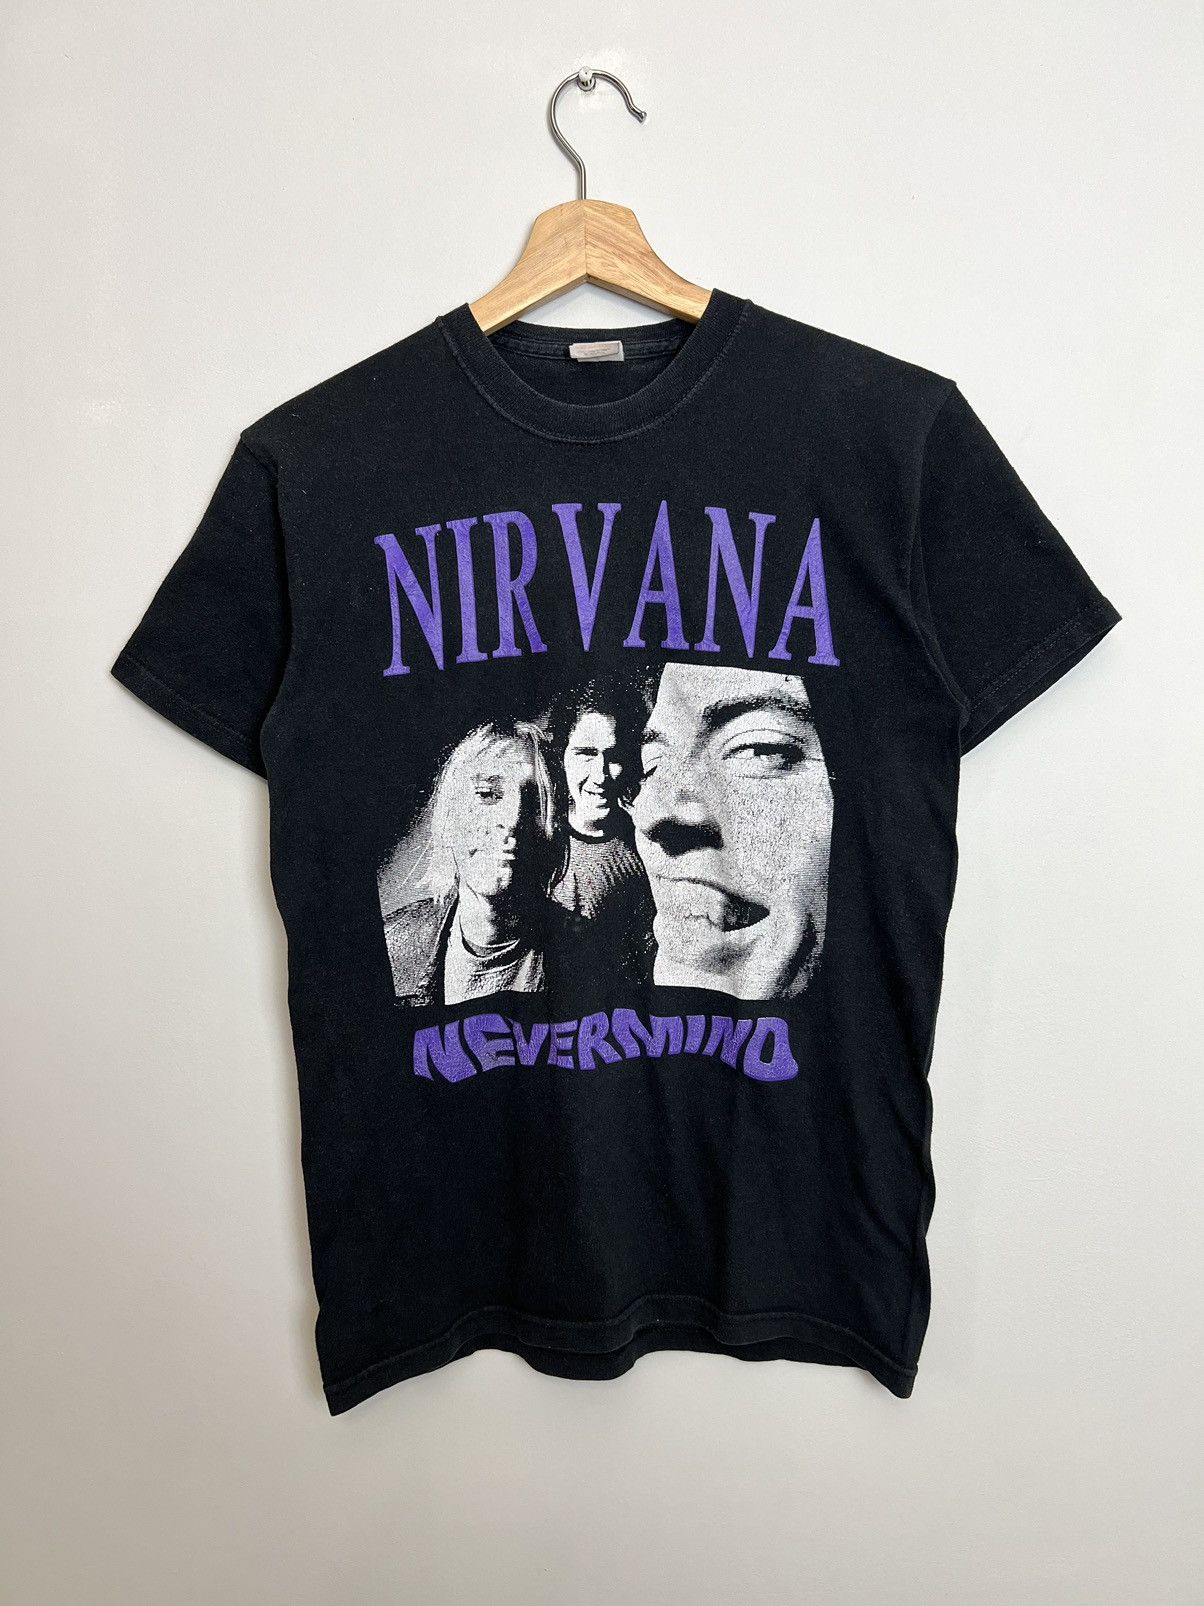 Vintage 90's Nirvana Nevermind Kurt Cobain Grunge Vintage T Shirt Size US S / EU 44-46 / 1 - 1 Preview